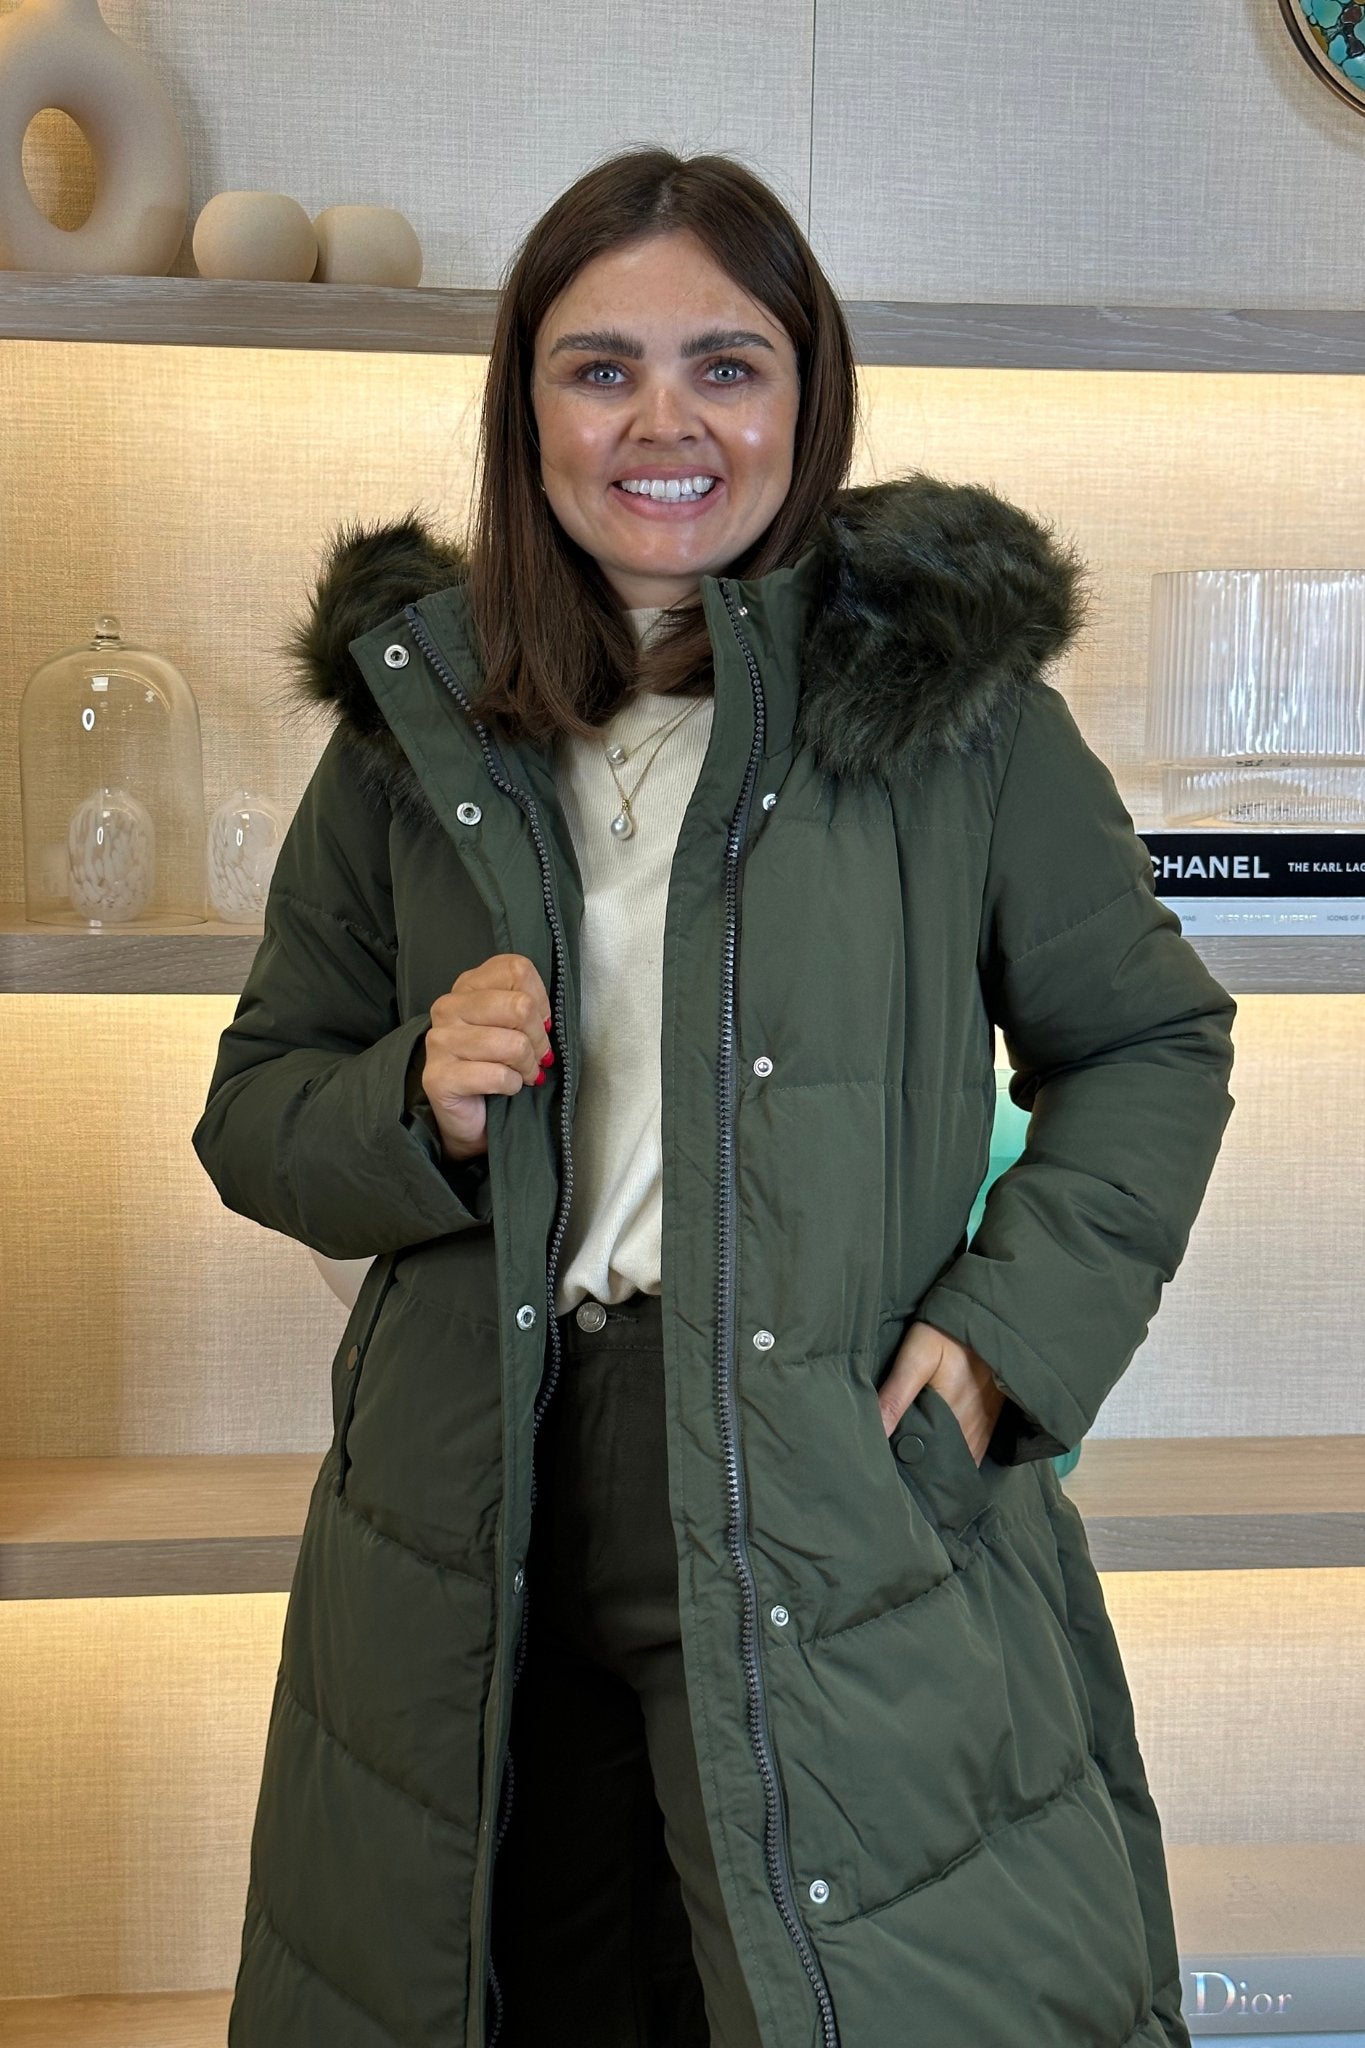 Paige Longline Puffa Coat In Khaki - The Walk in Wardrobe